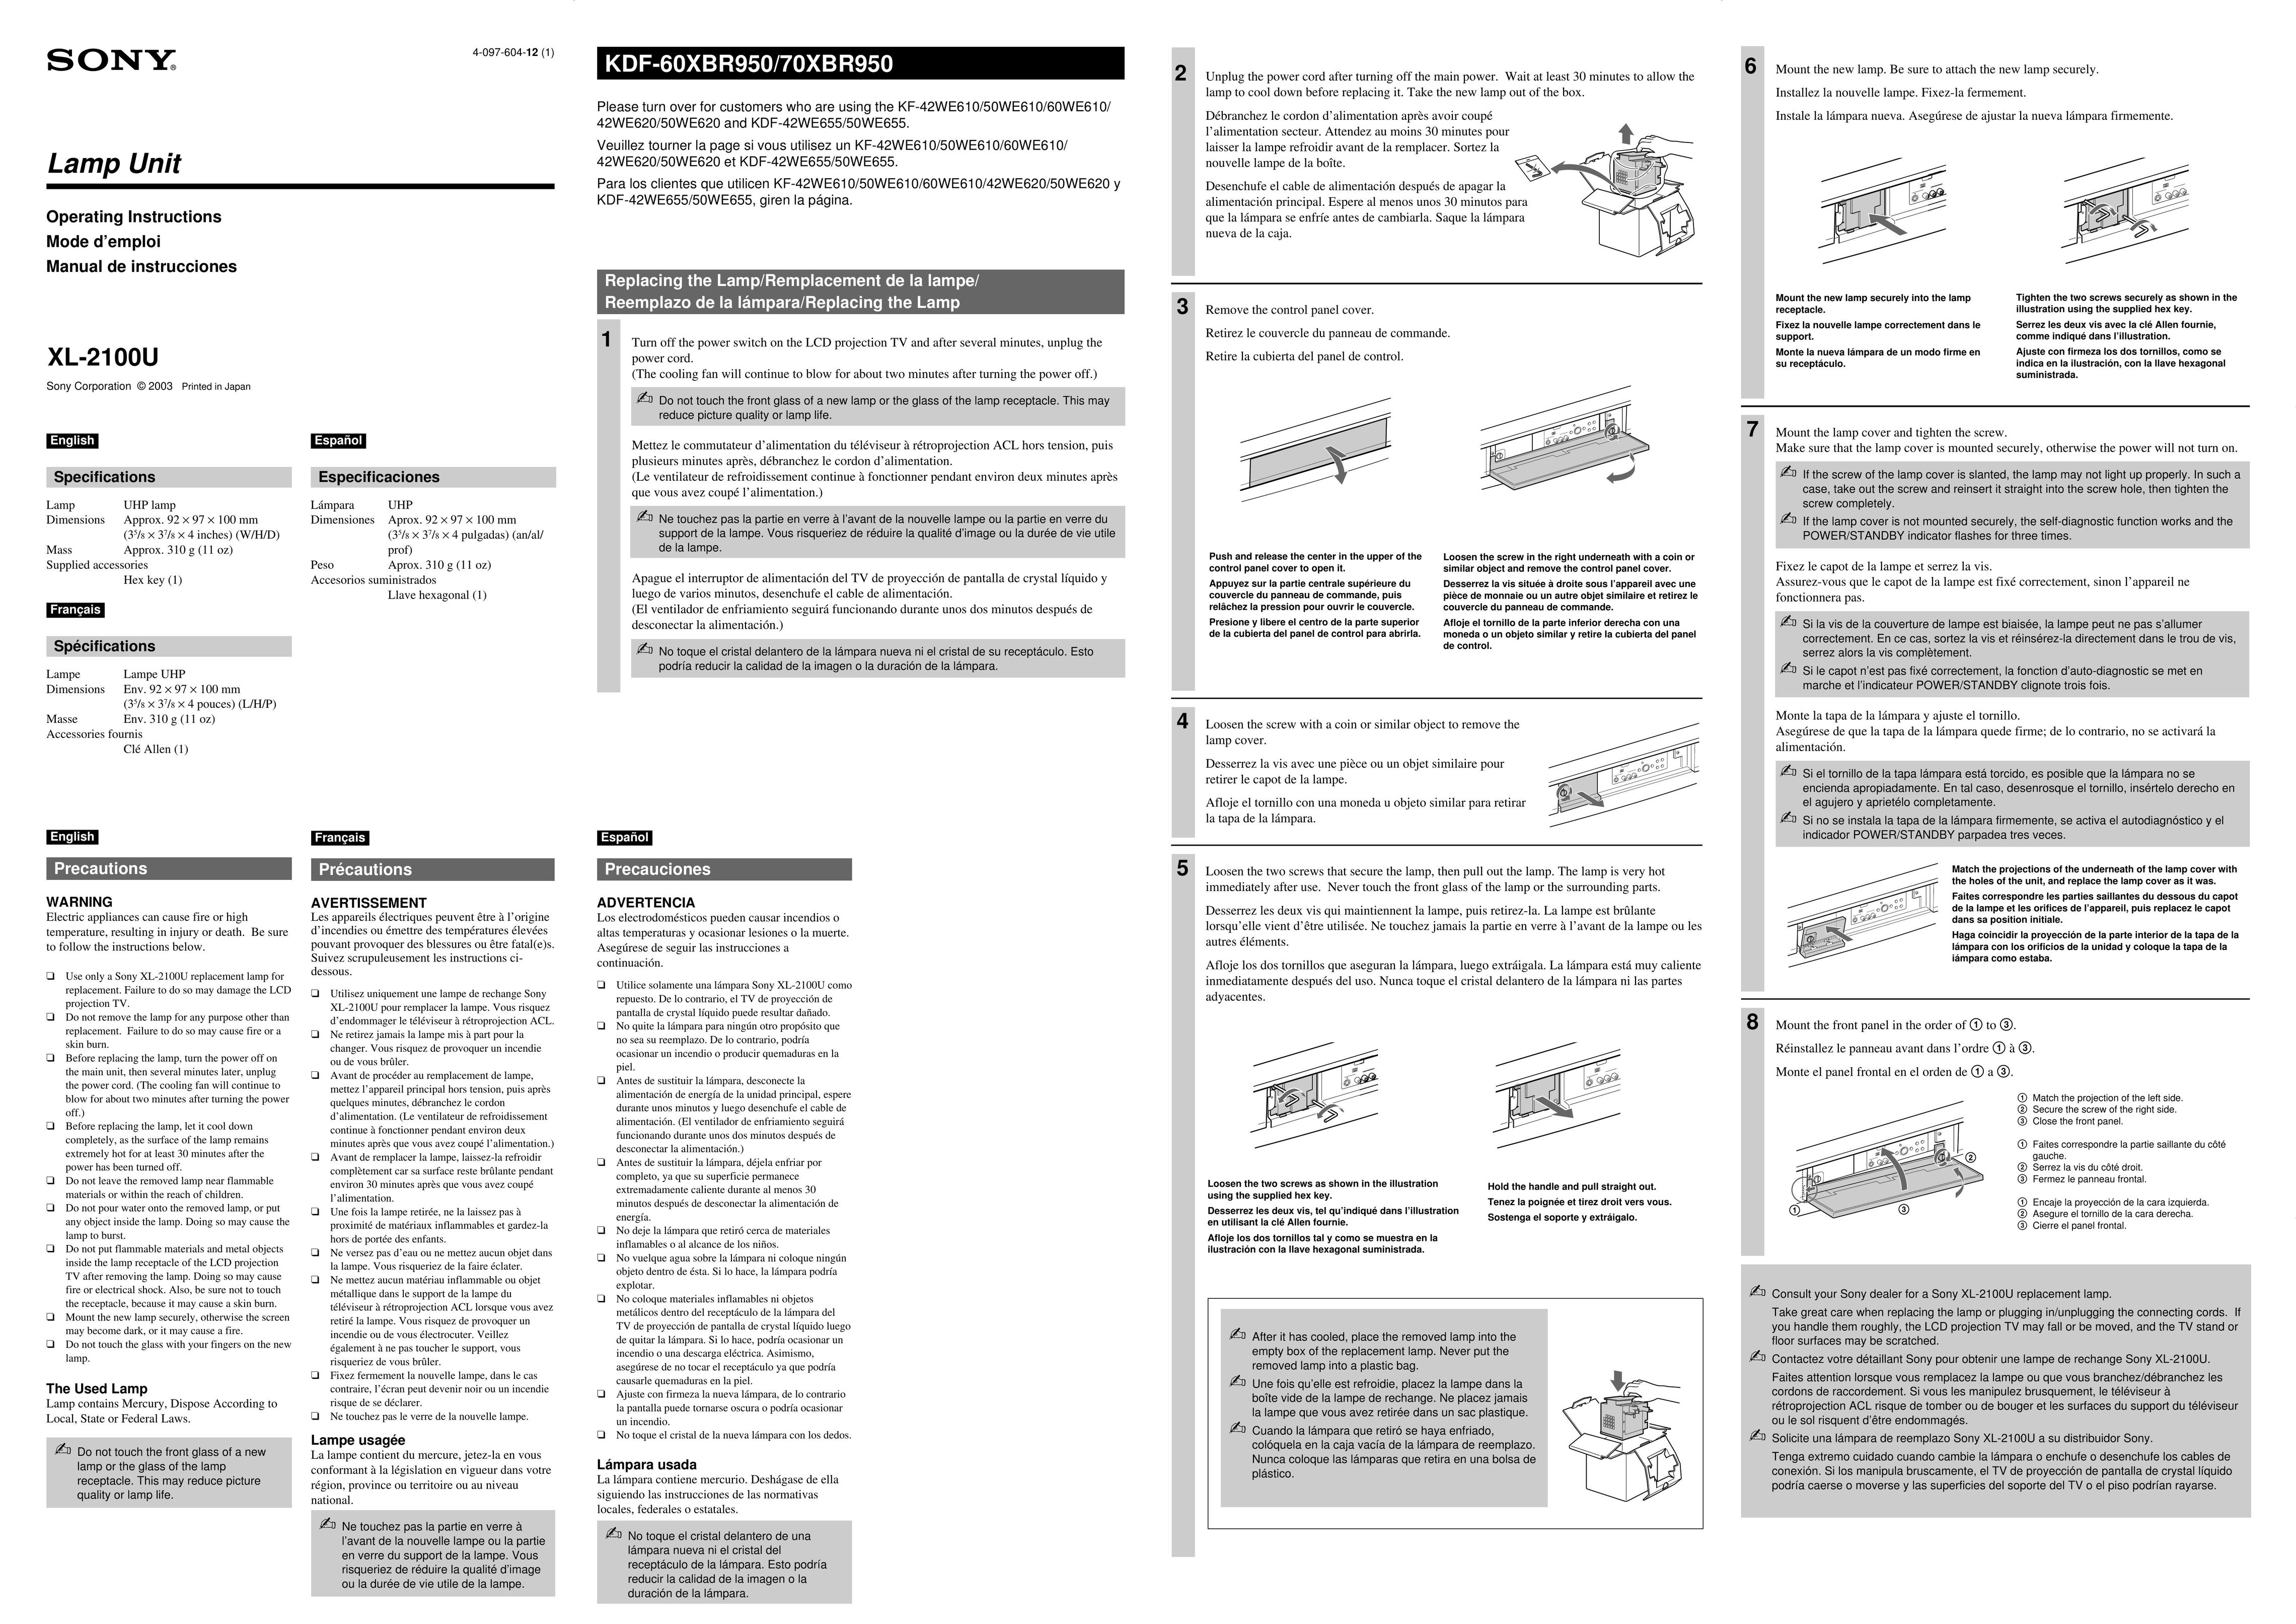 Sony XL-2100U Pet Fence User Manual (Page 1)